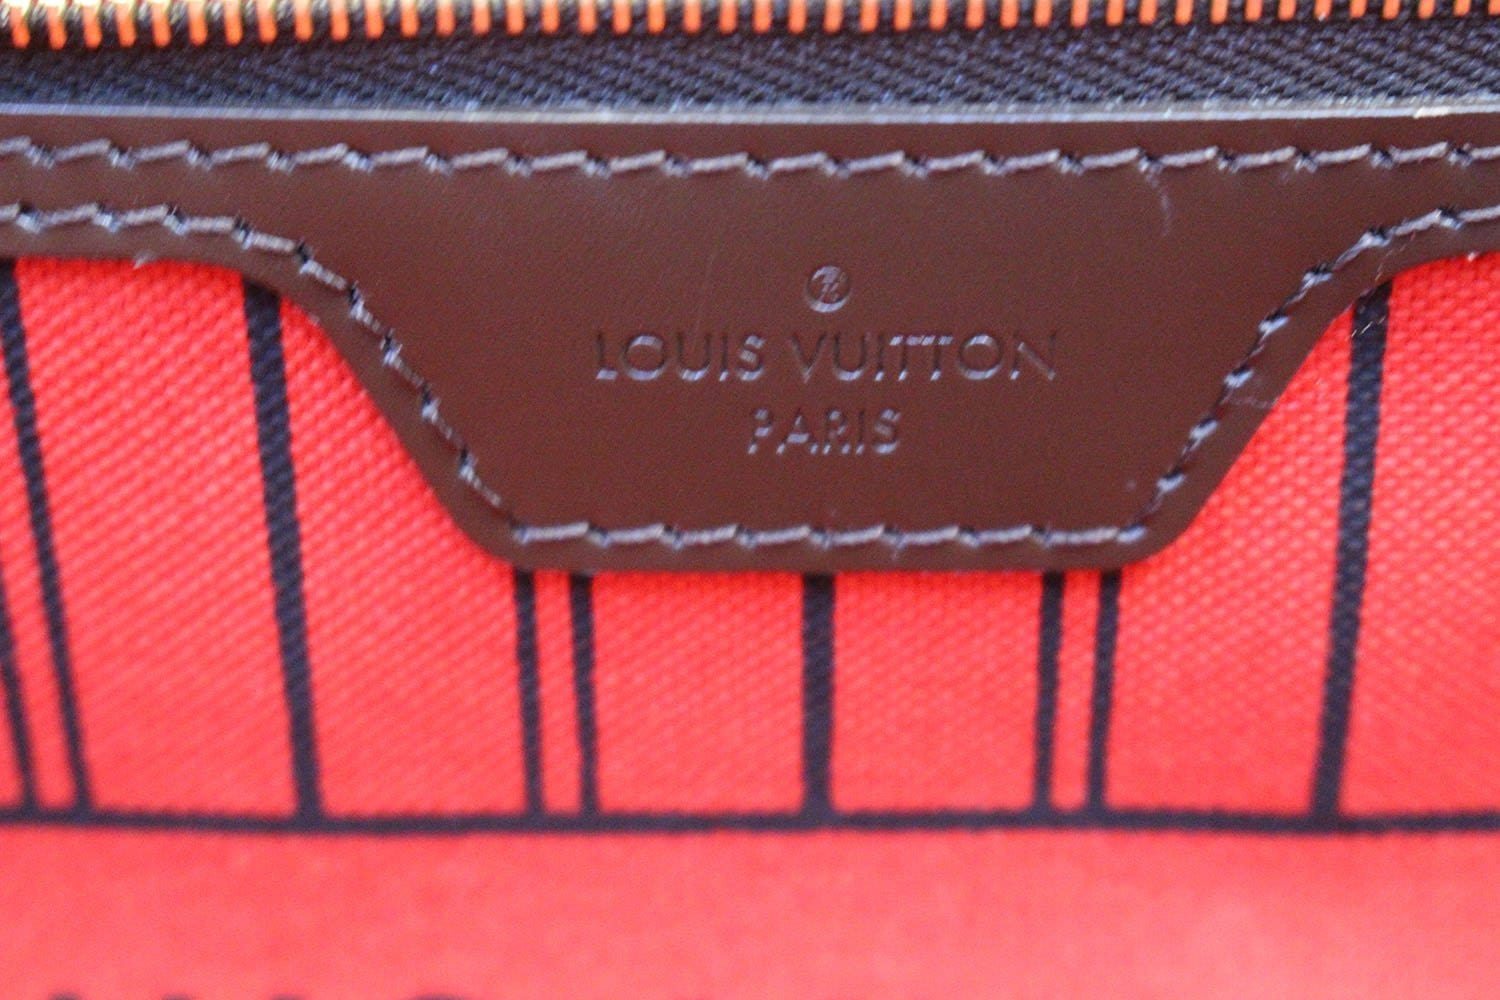 Louis Vuitton 2008 pre-owned Damier Ebène Neverfull GM Tote Bag - Farfetch